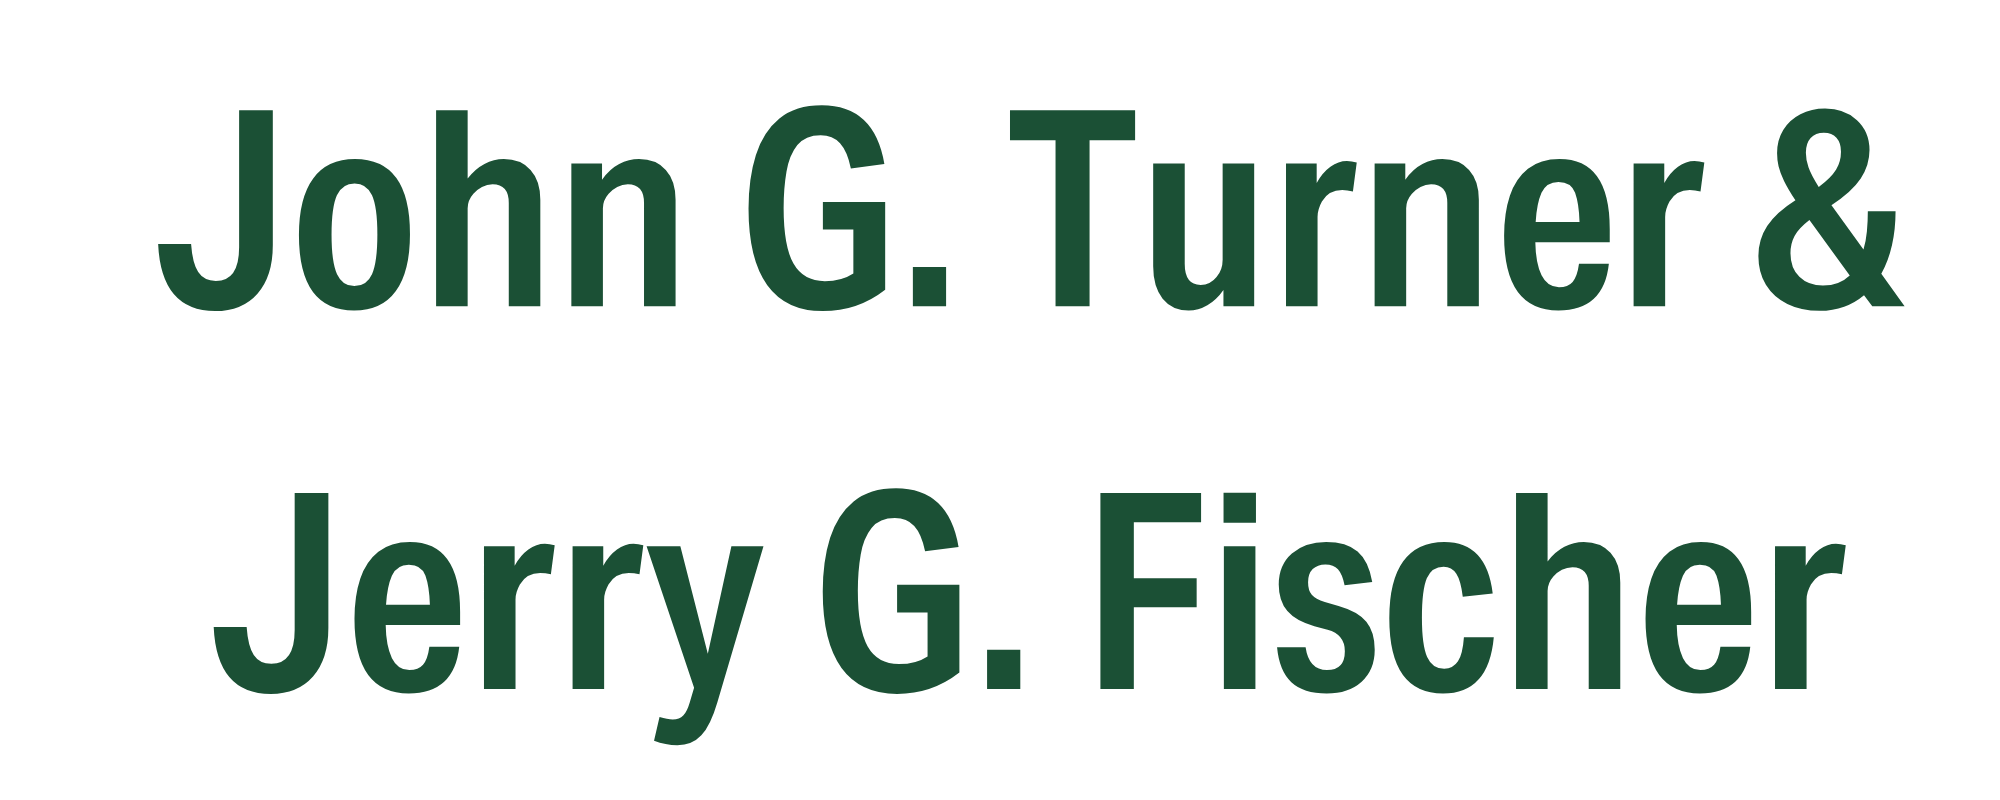 John G. Turner & Jerry G. Fischer